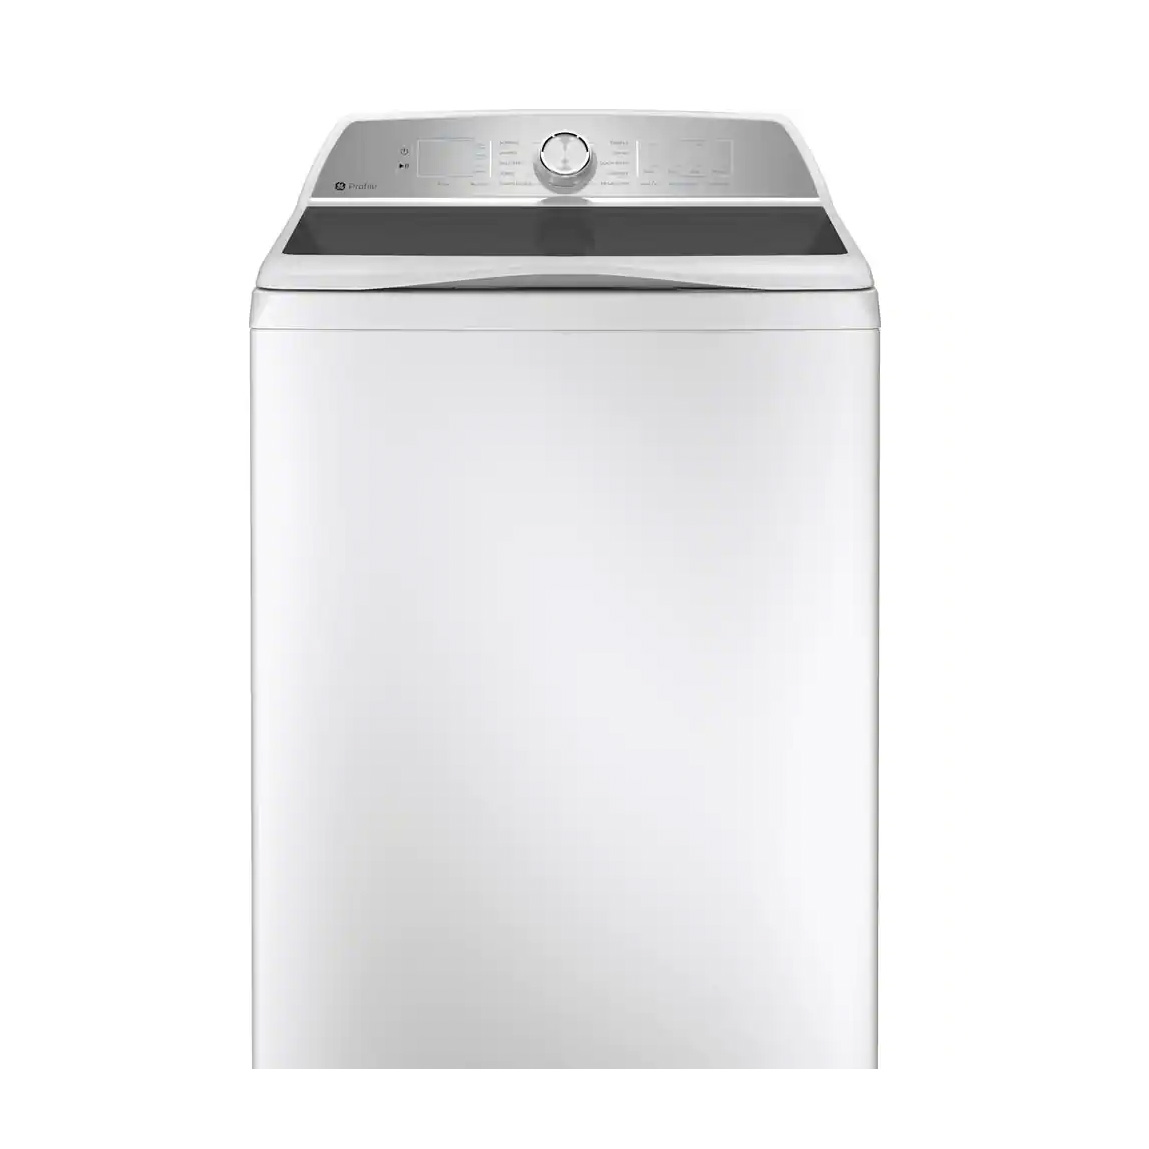 GE Profile top-loading washing machine in white